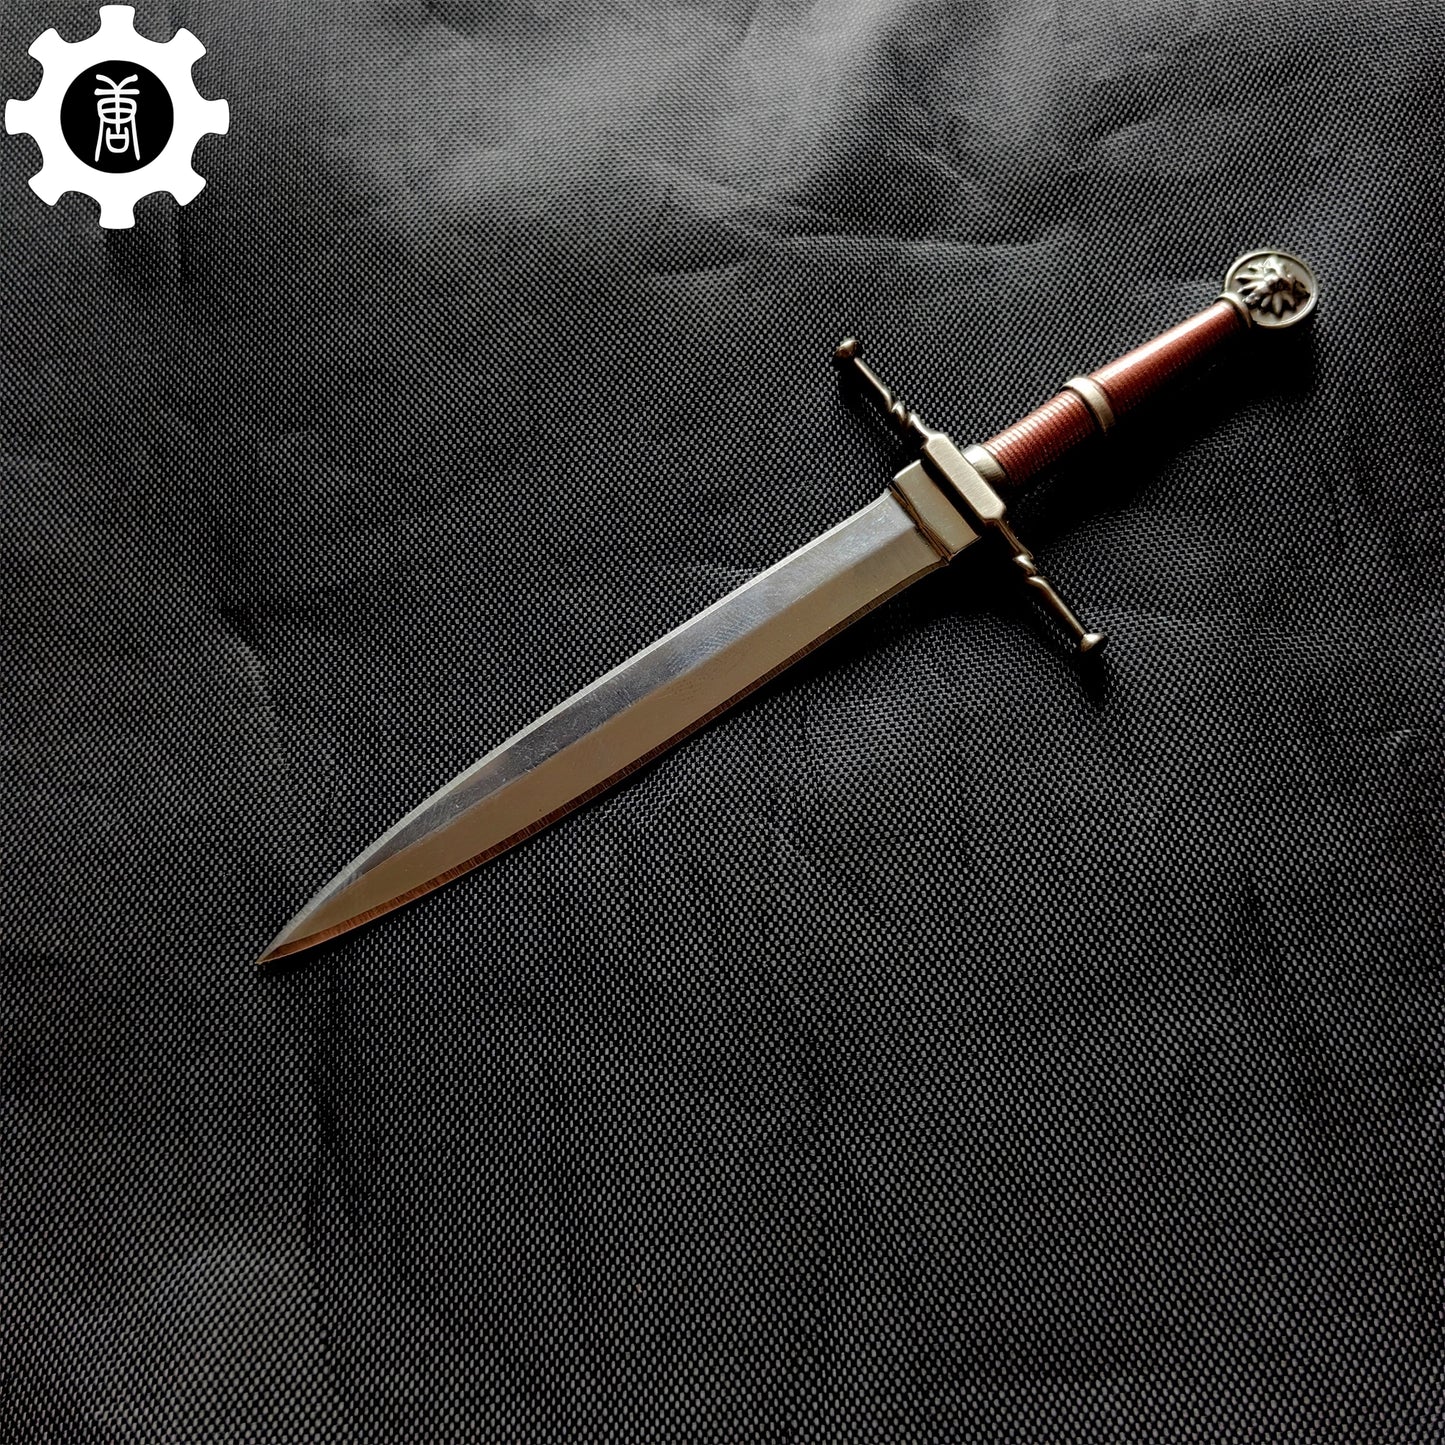 Geralt Steel Sword Mini Metal Replica EDC Knife